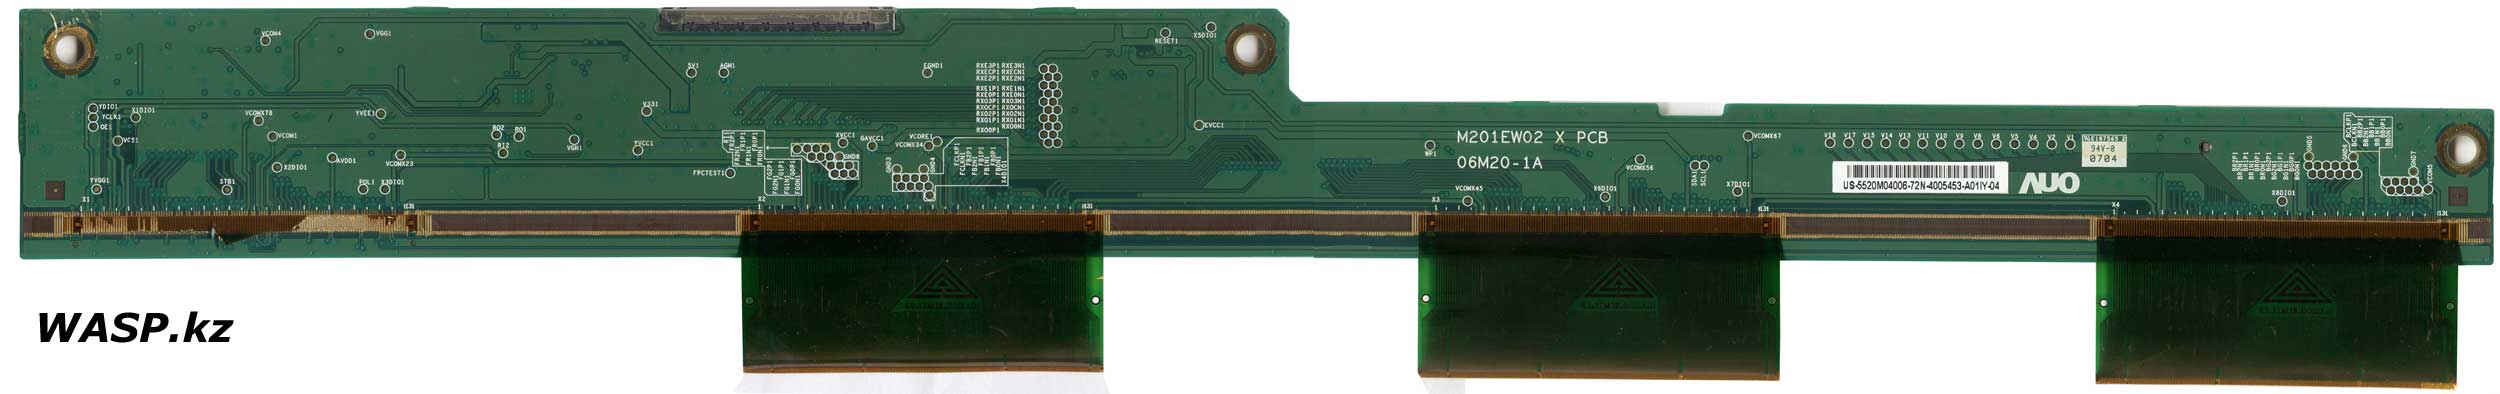 ремонт ЖК-матрицы M201EW02 X PCB 06M20-1A